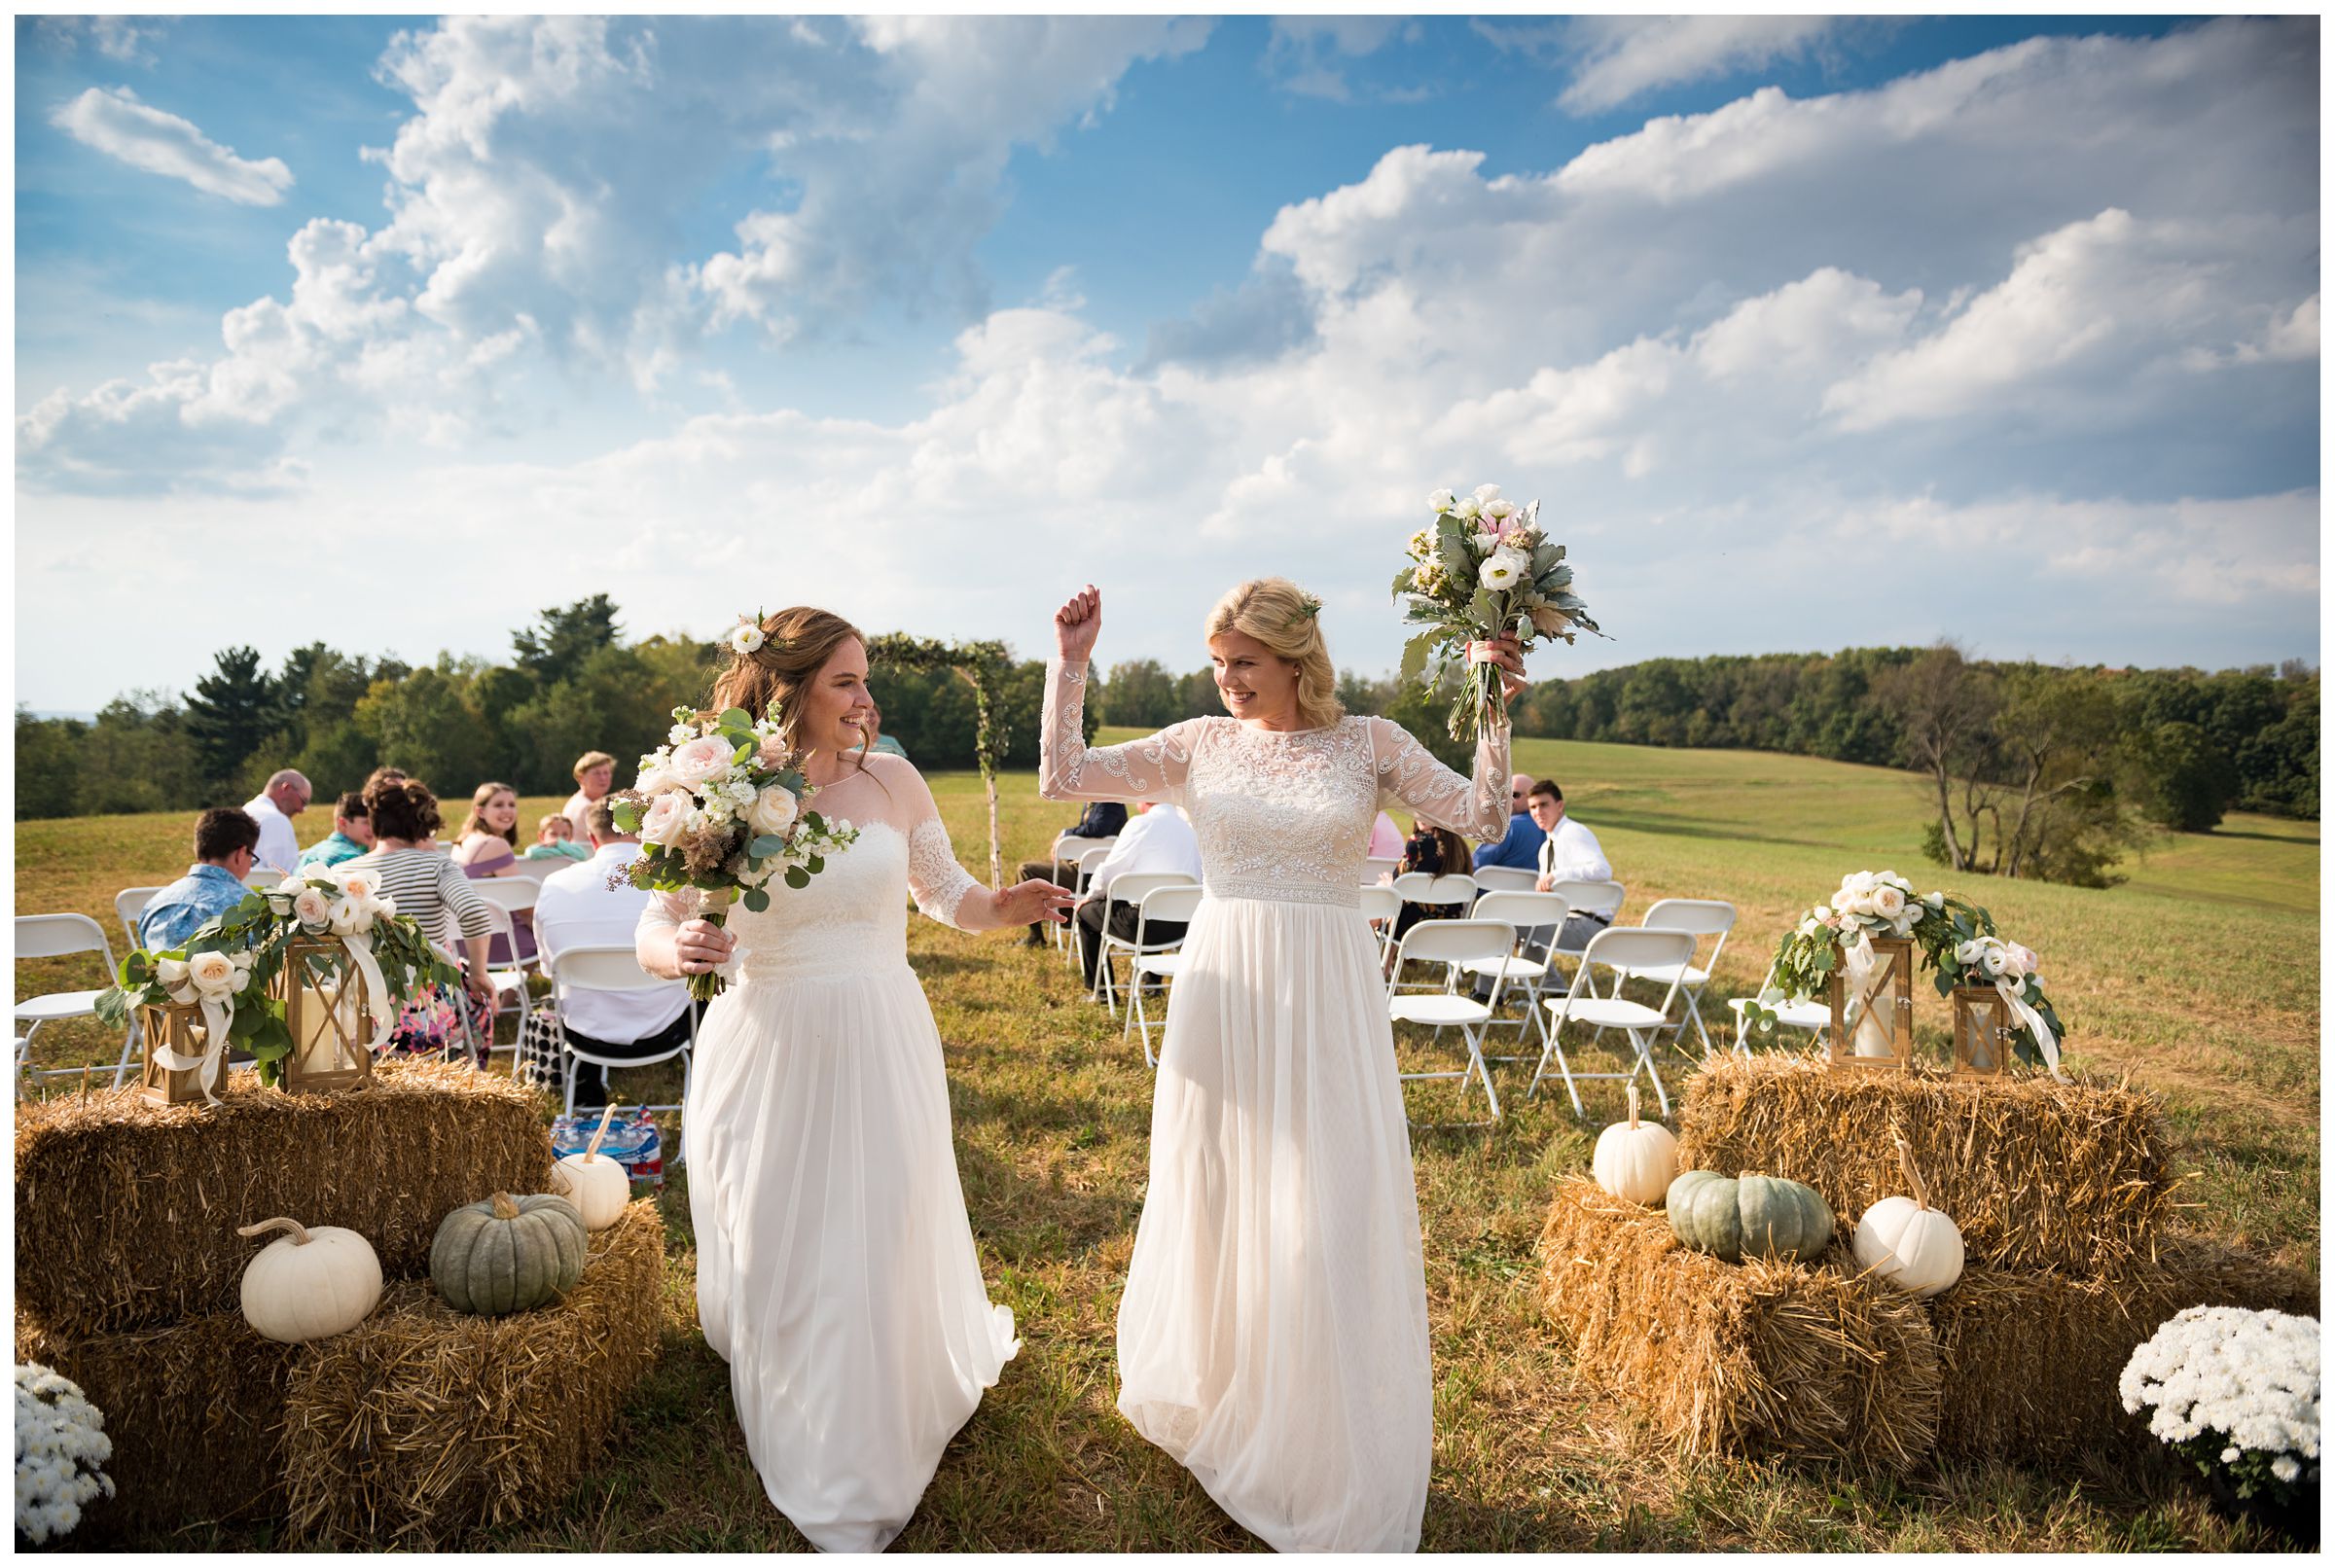 Two brides exiting their fall same-sex wedding ceremony on a farm.